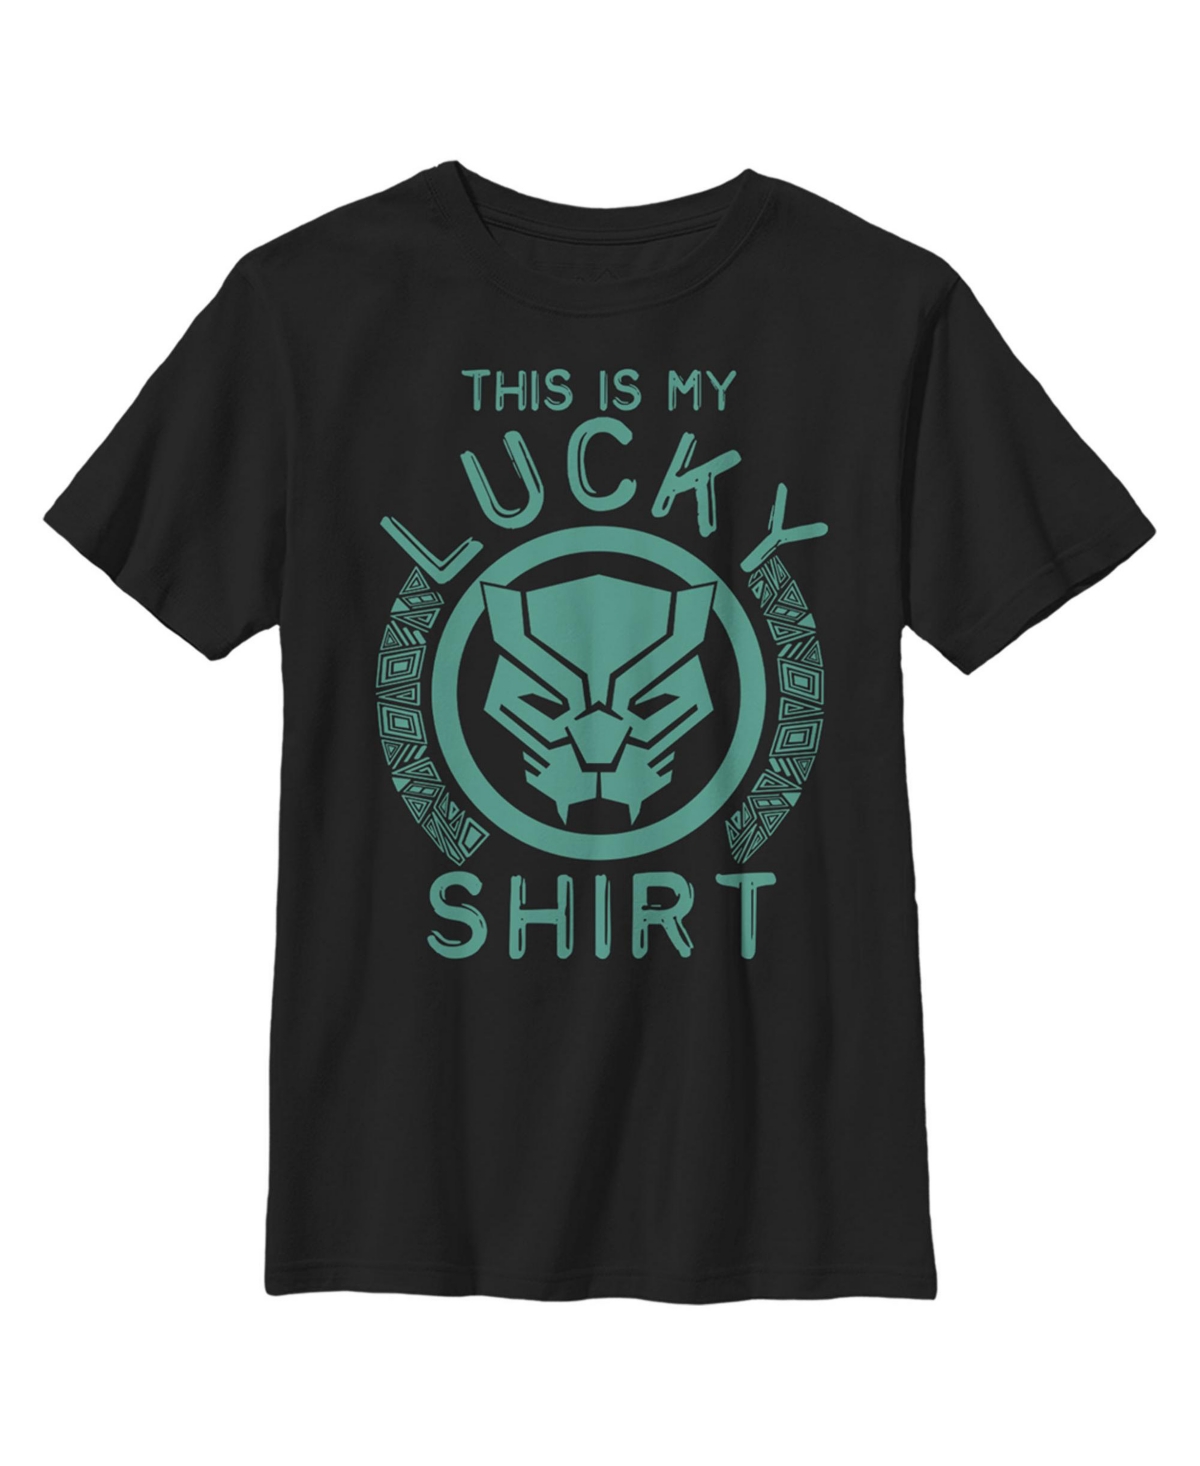 Boy's Marvel St. Patrick's Day Black Panther Lucky Shirt Child T-Shirt - Black